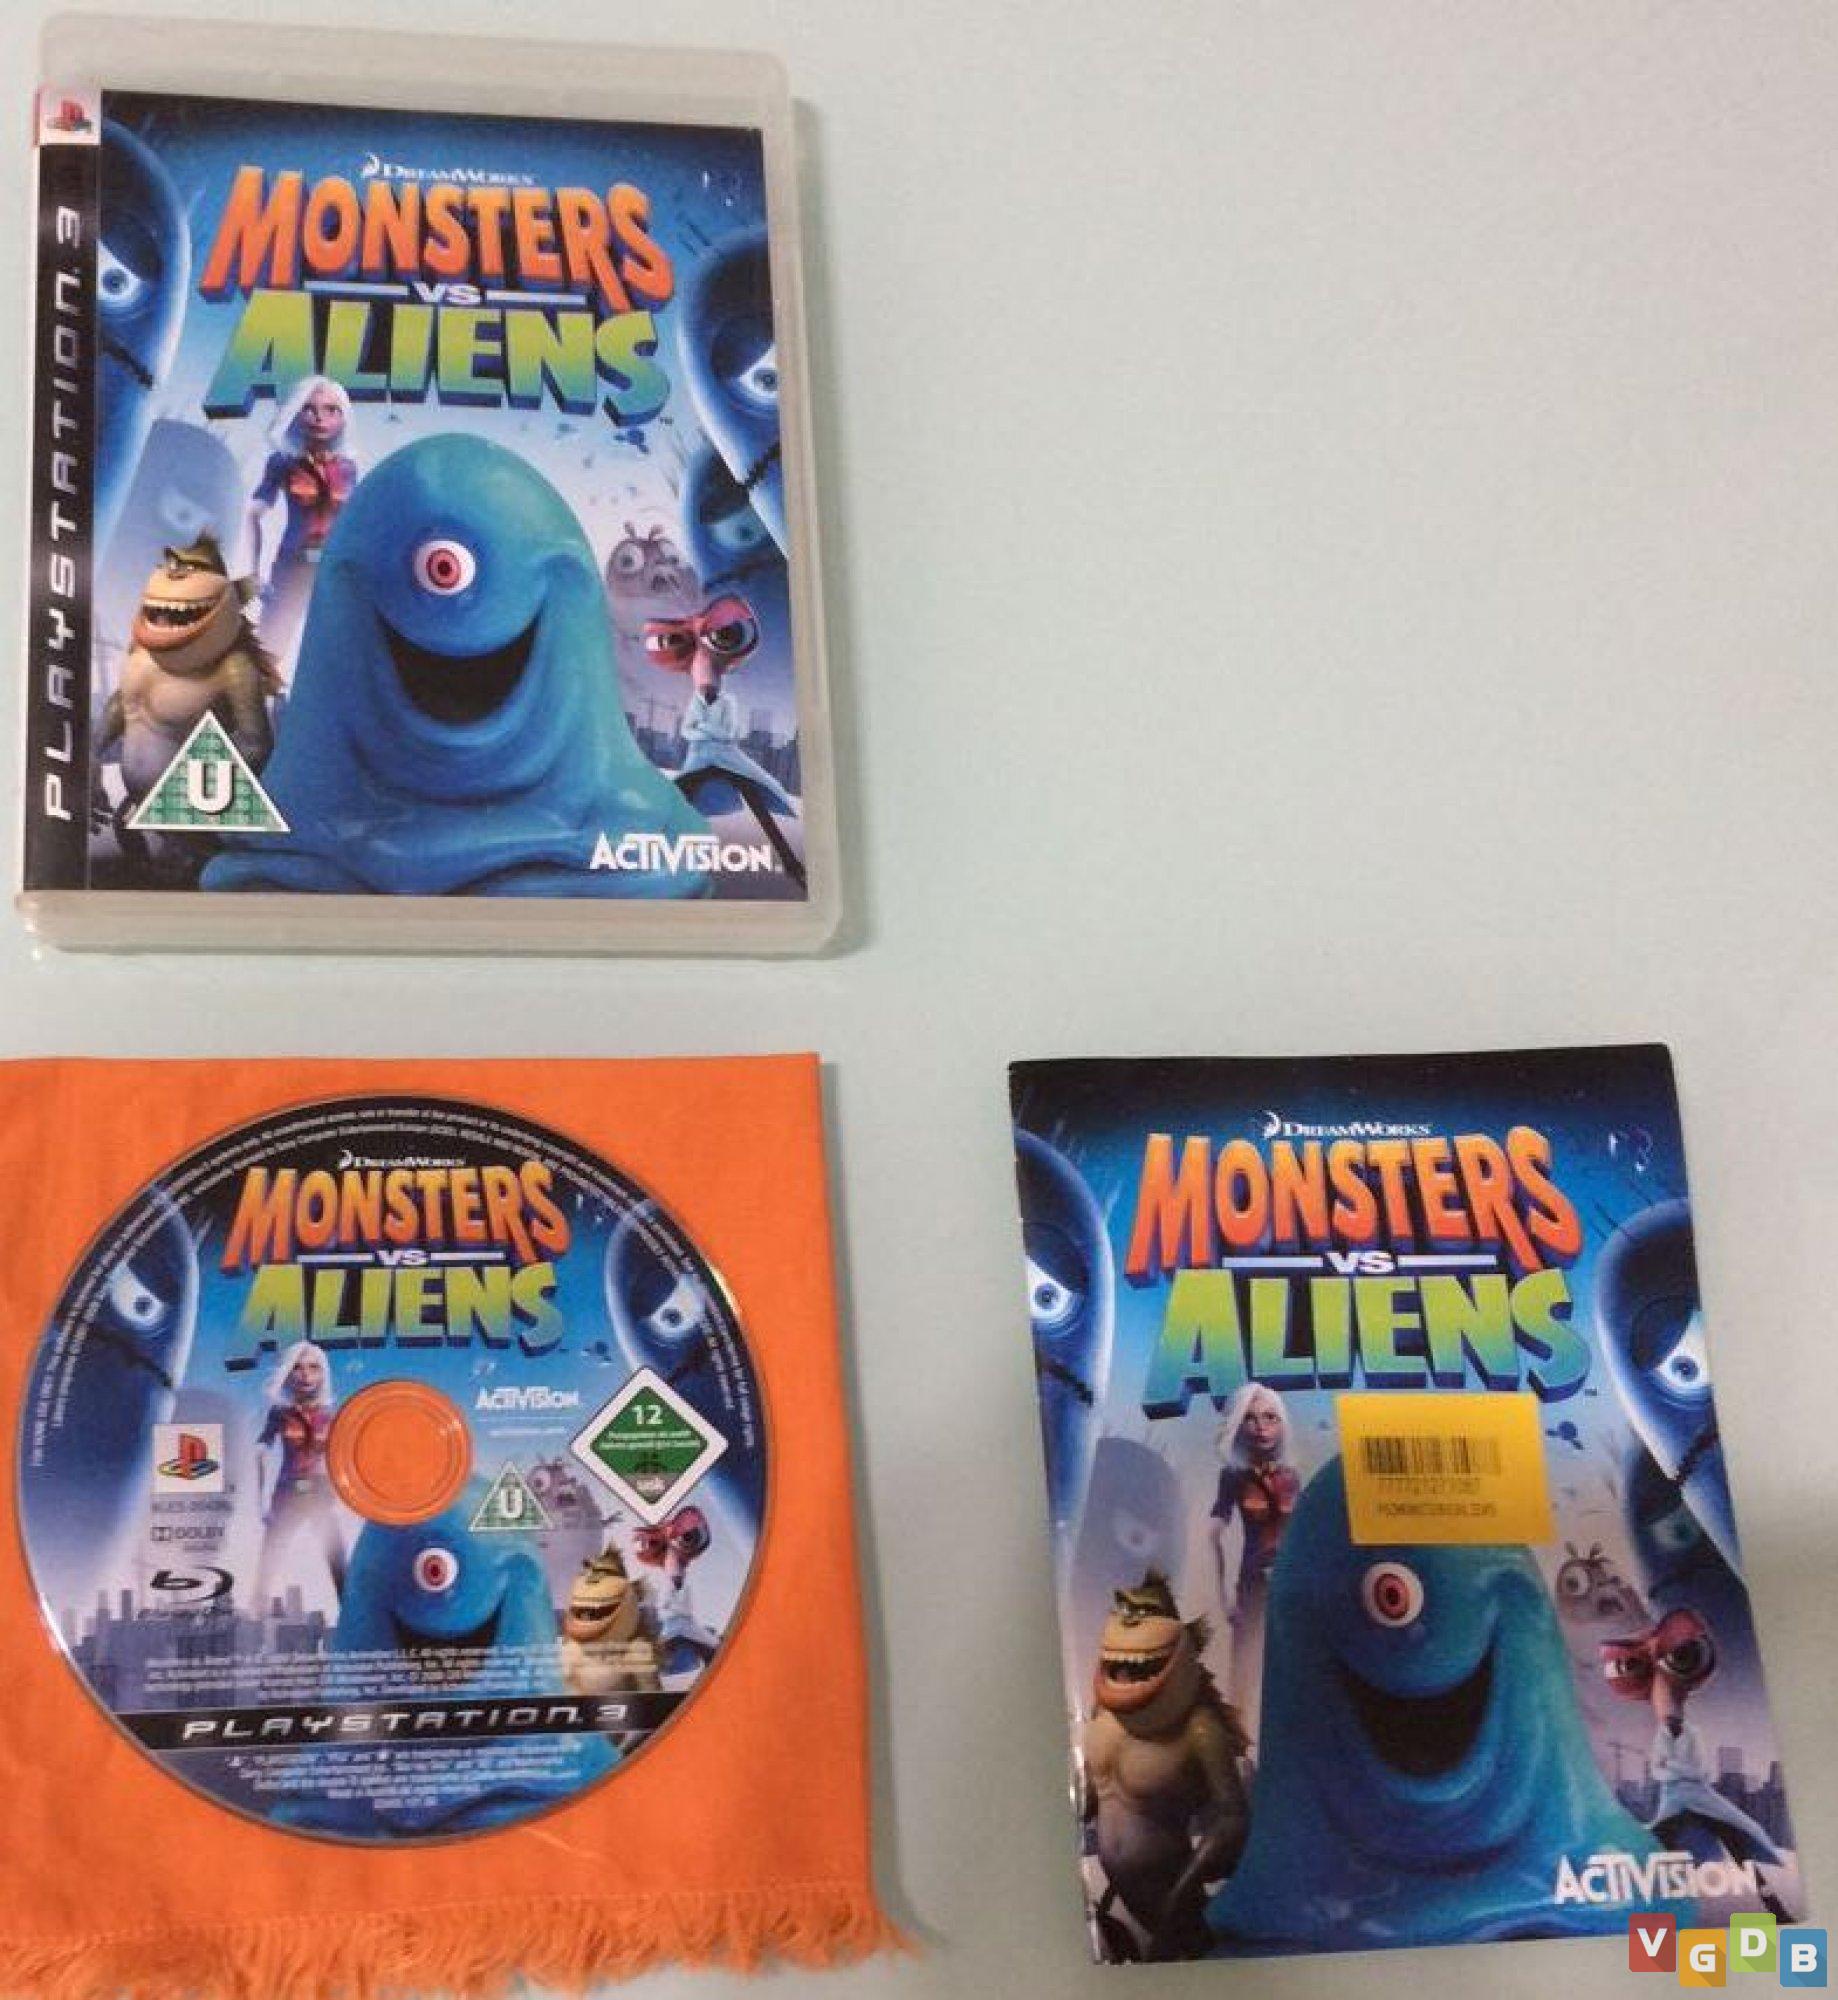 Jogo Monsters vs Aliens PS2 ( Aventura ) Play 2